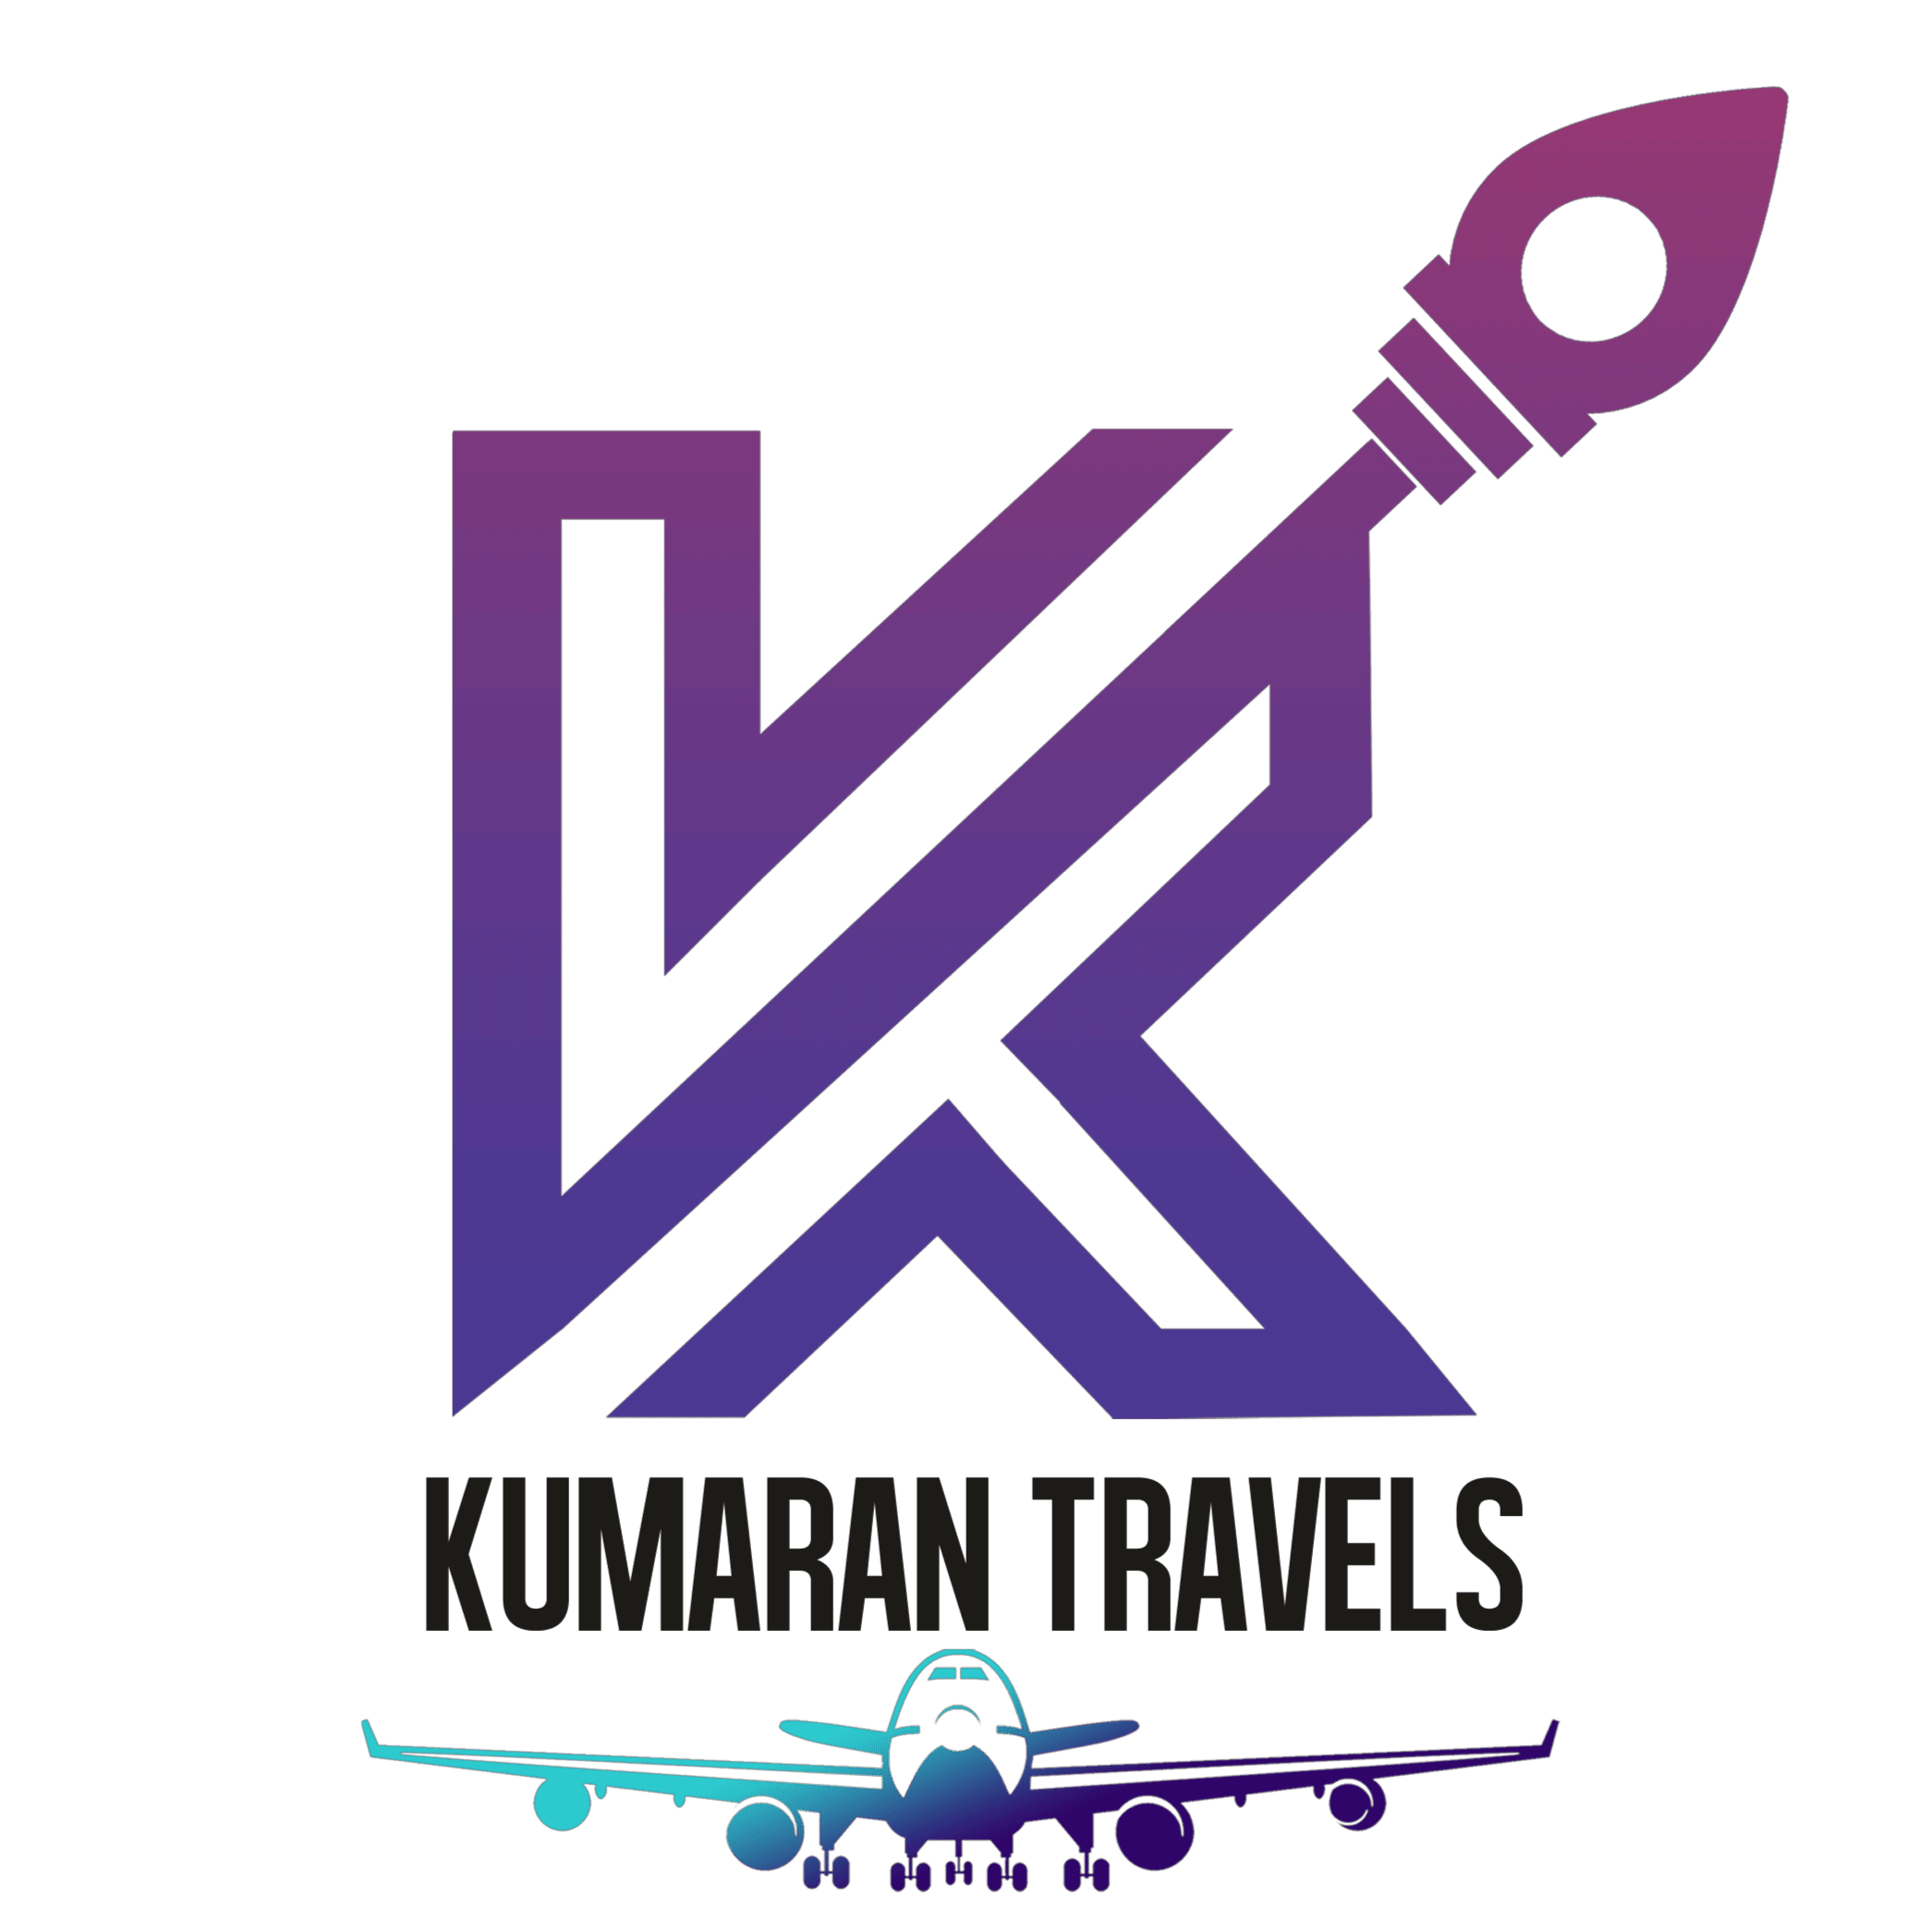 Kumaran Travels logo